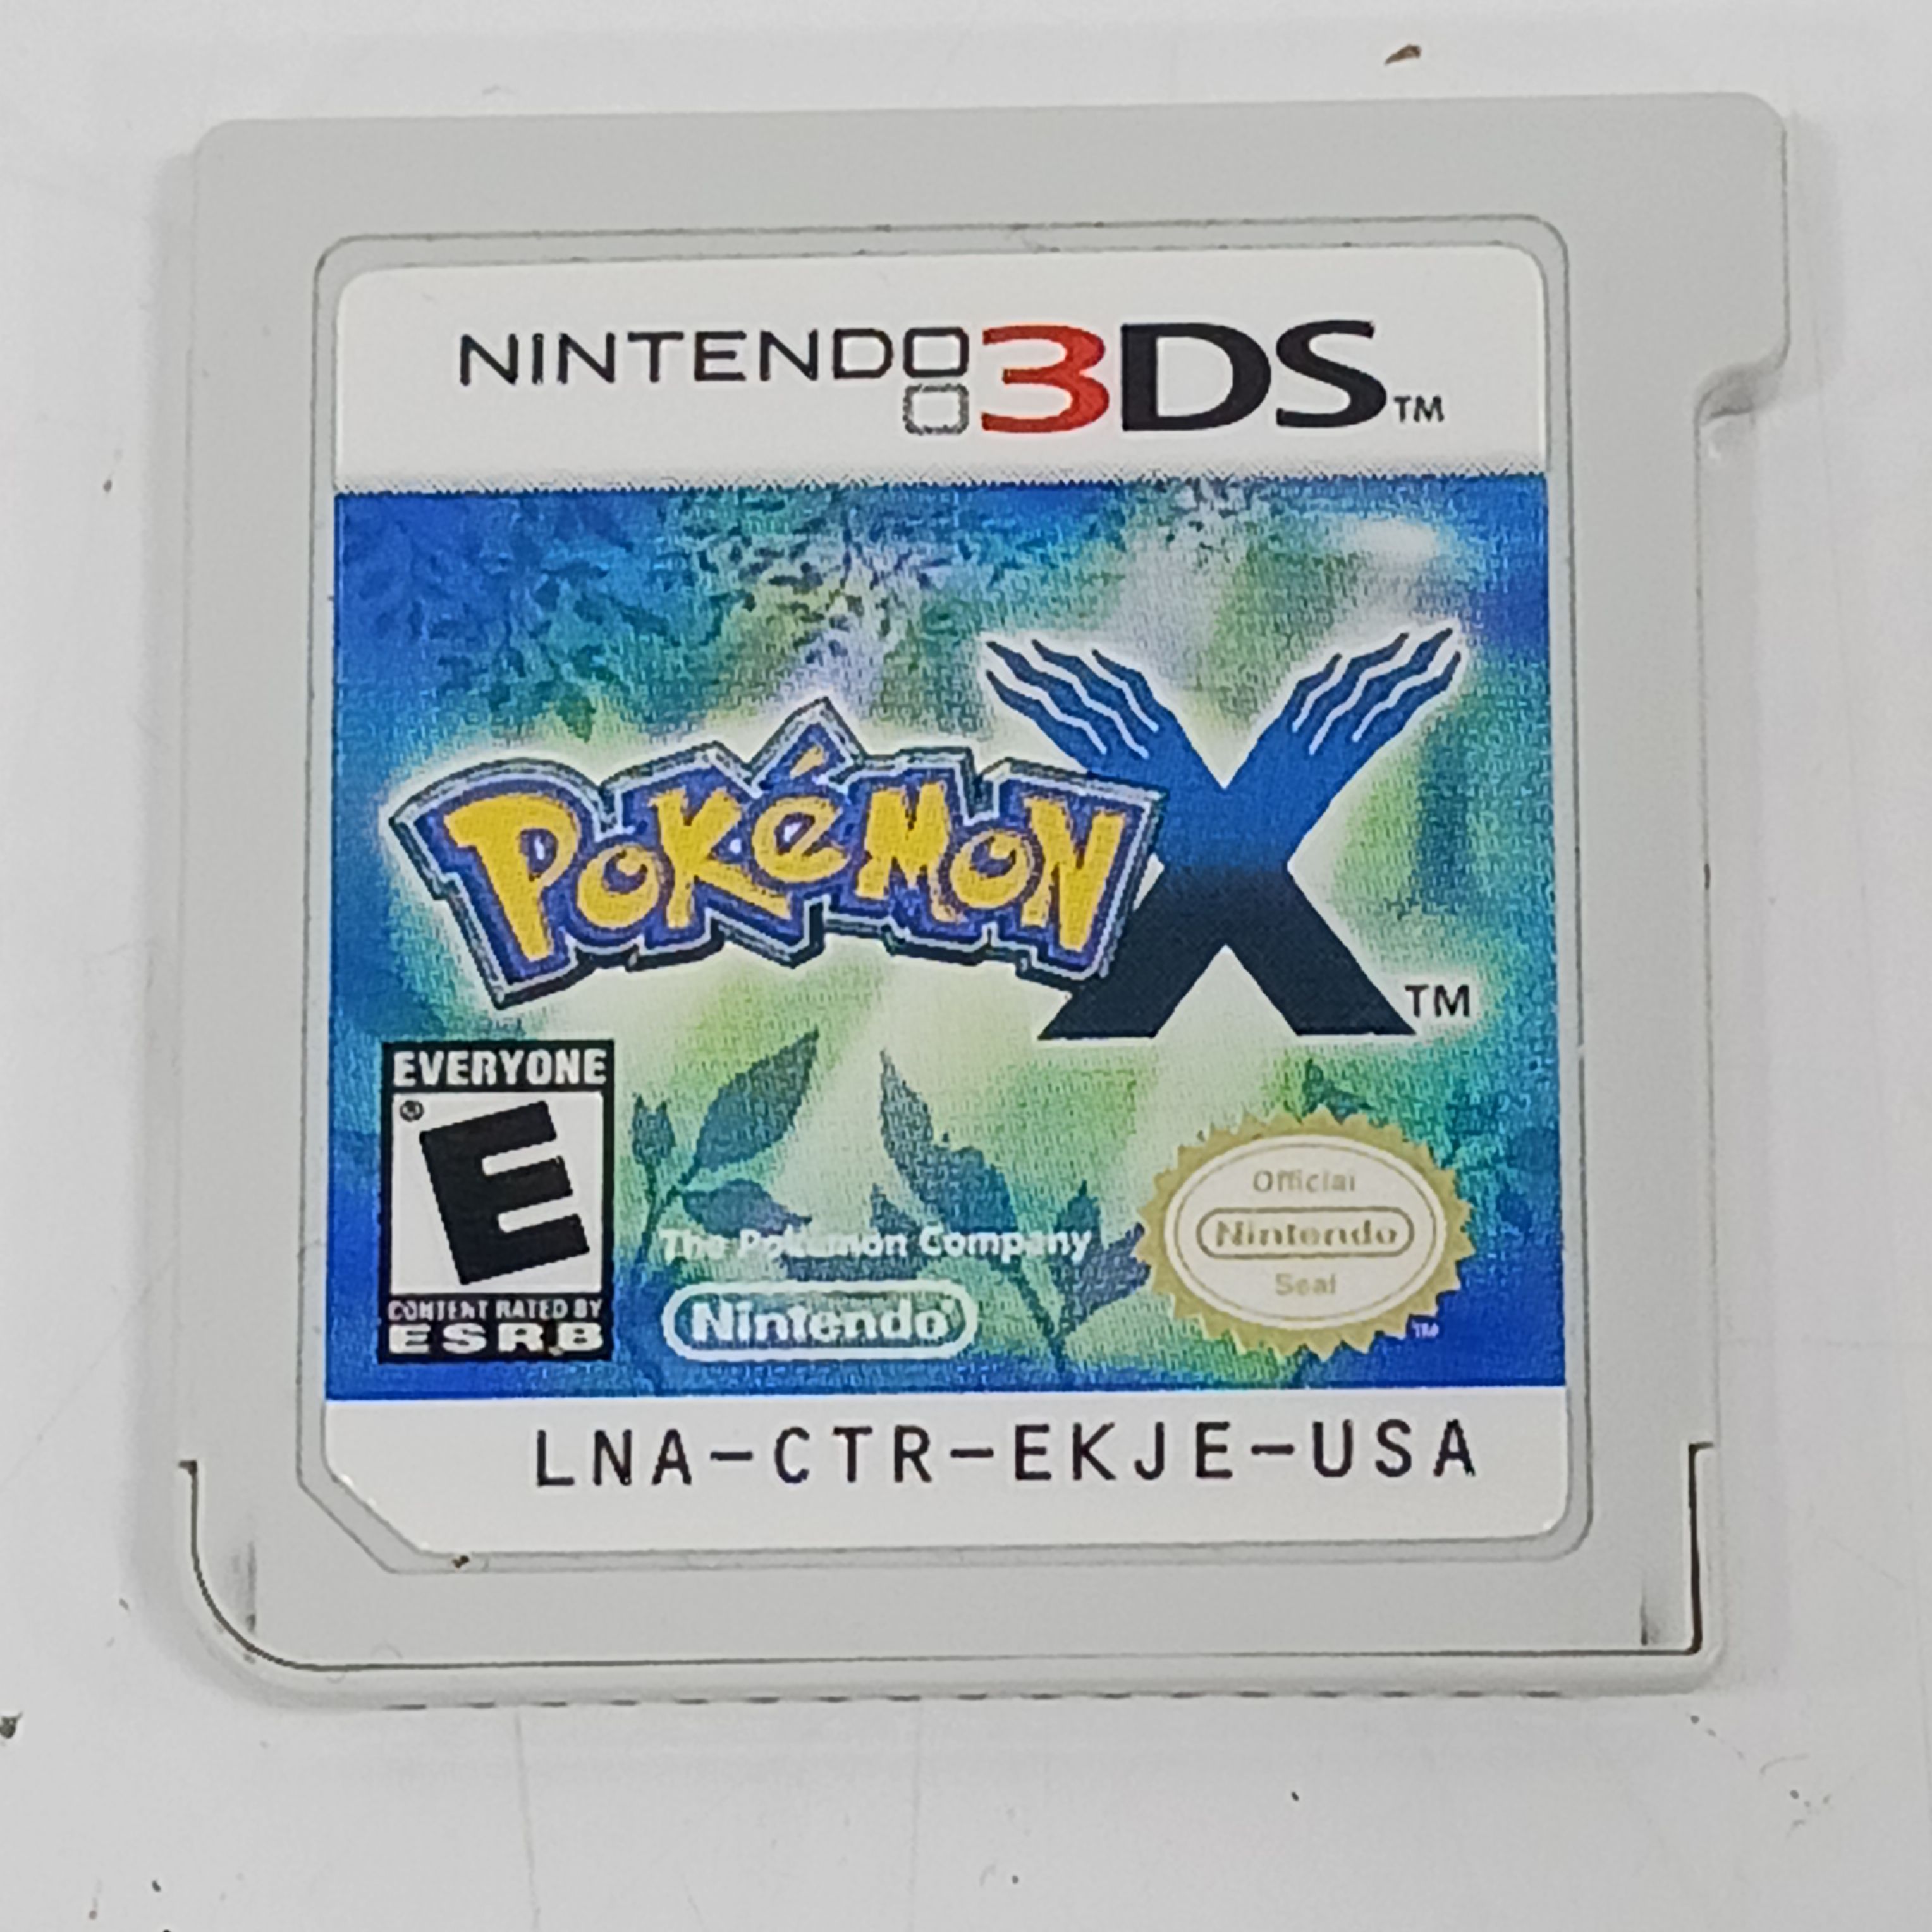 Buy Pokémon X Nintendo 3DS, Cheap price